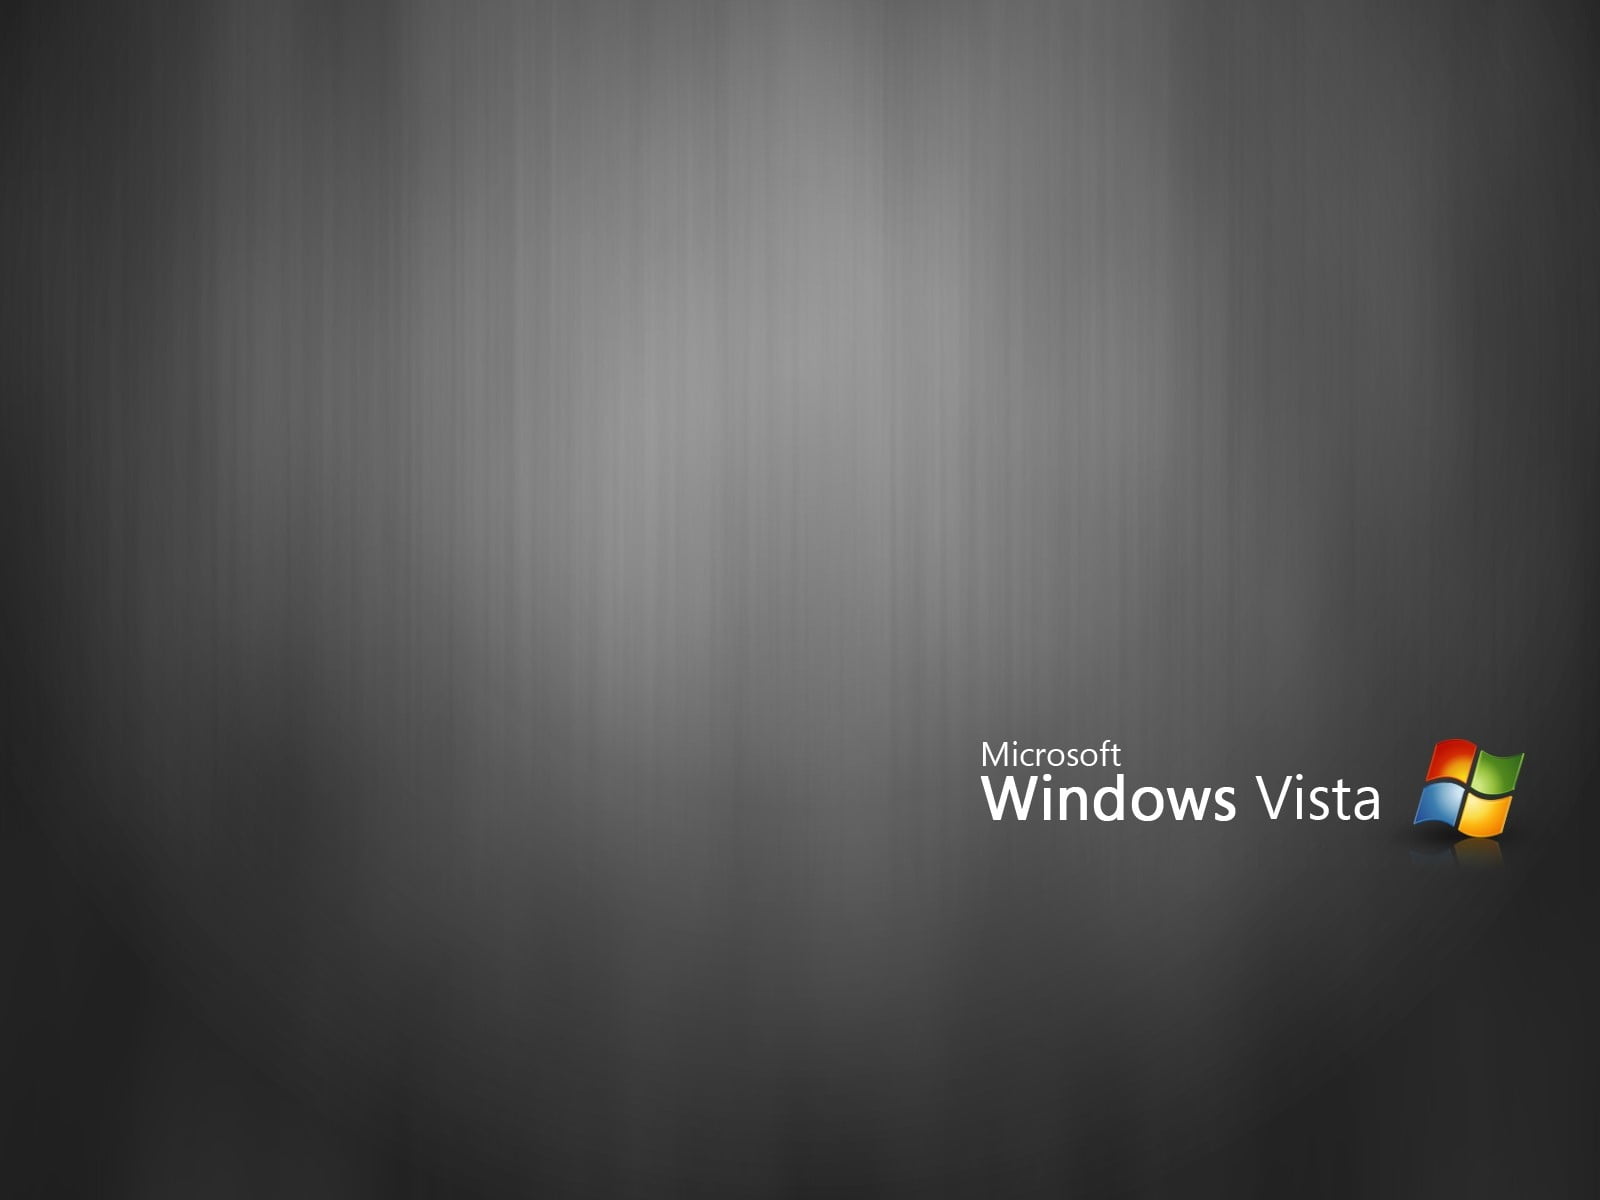 Microsoft, Windows, Vista, System, Background, text, communication